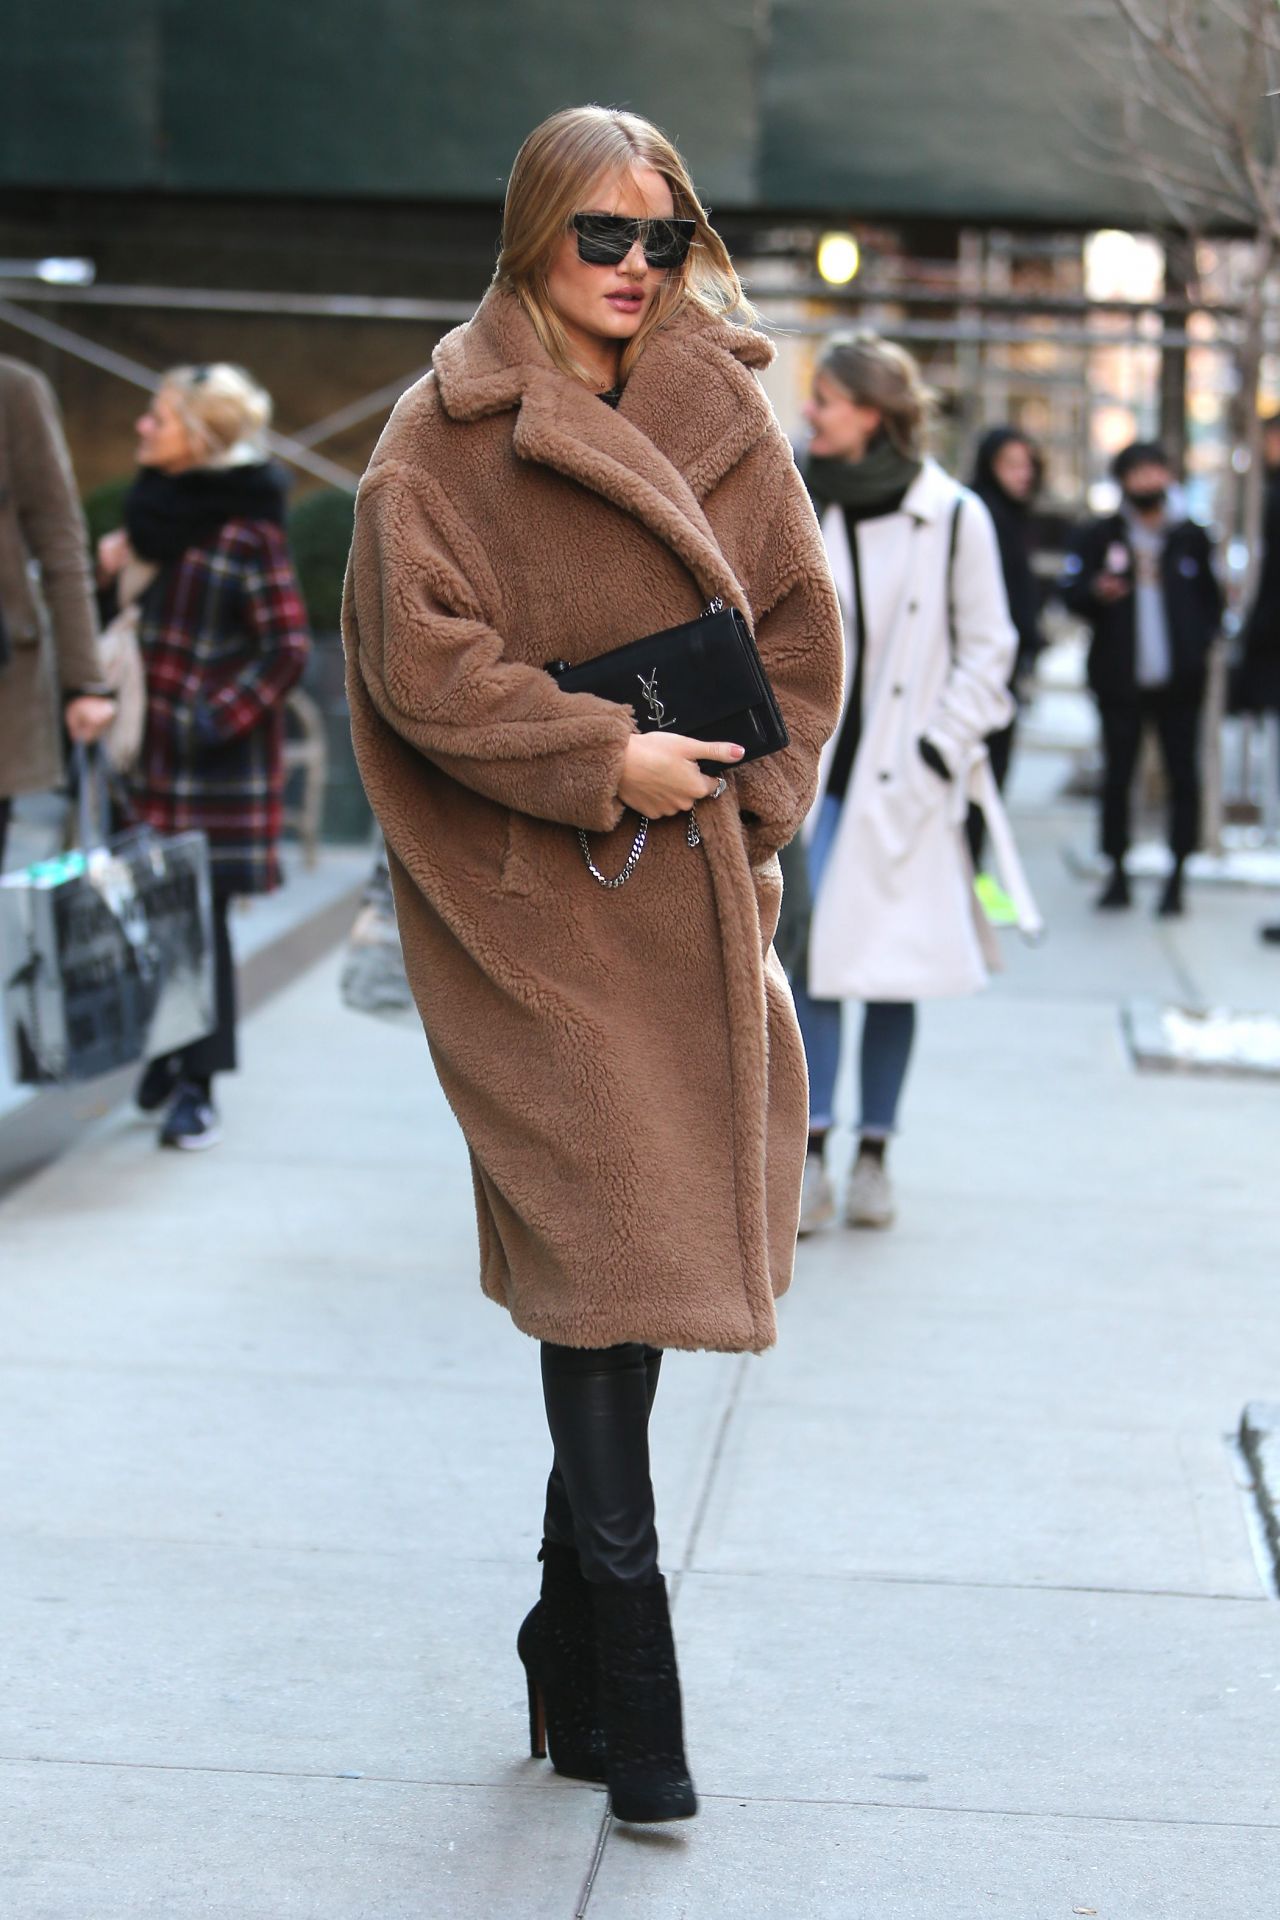 Rosie Huntington-Whiteley in Fleece Coat - New York City 12/07/2017 ...